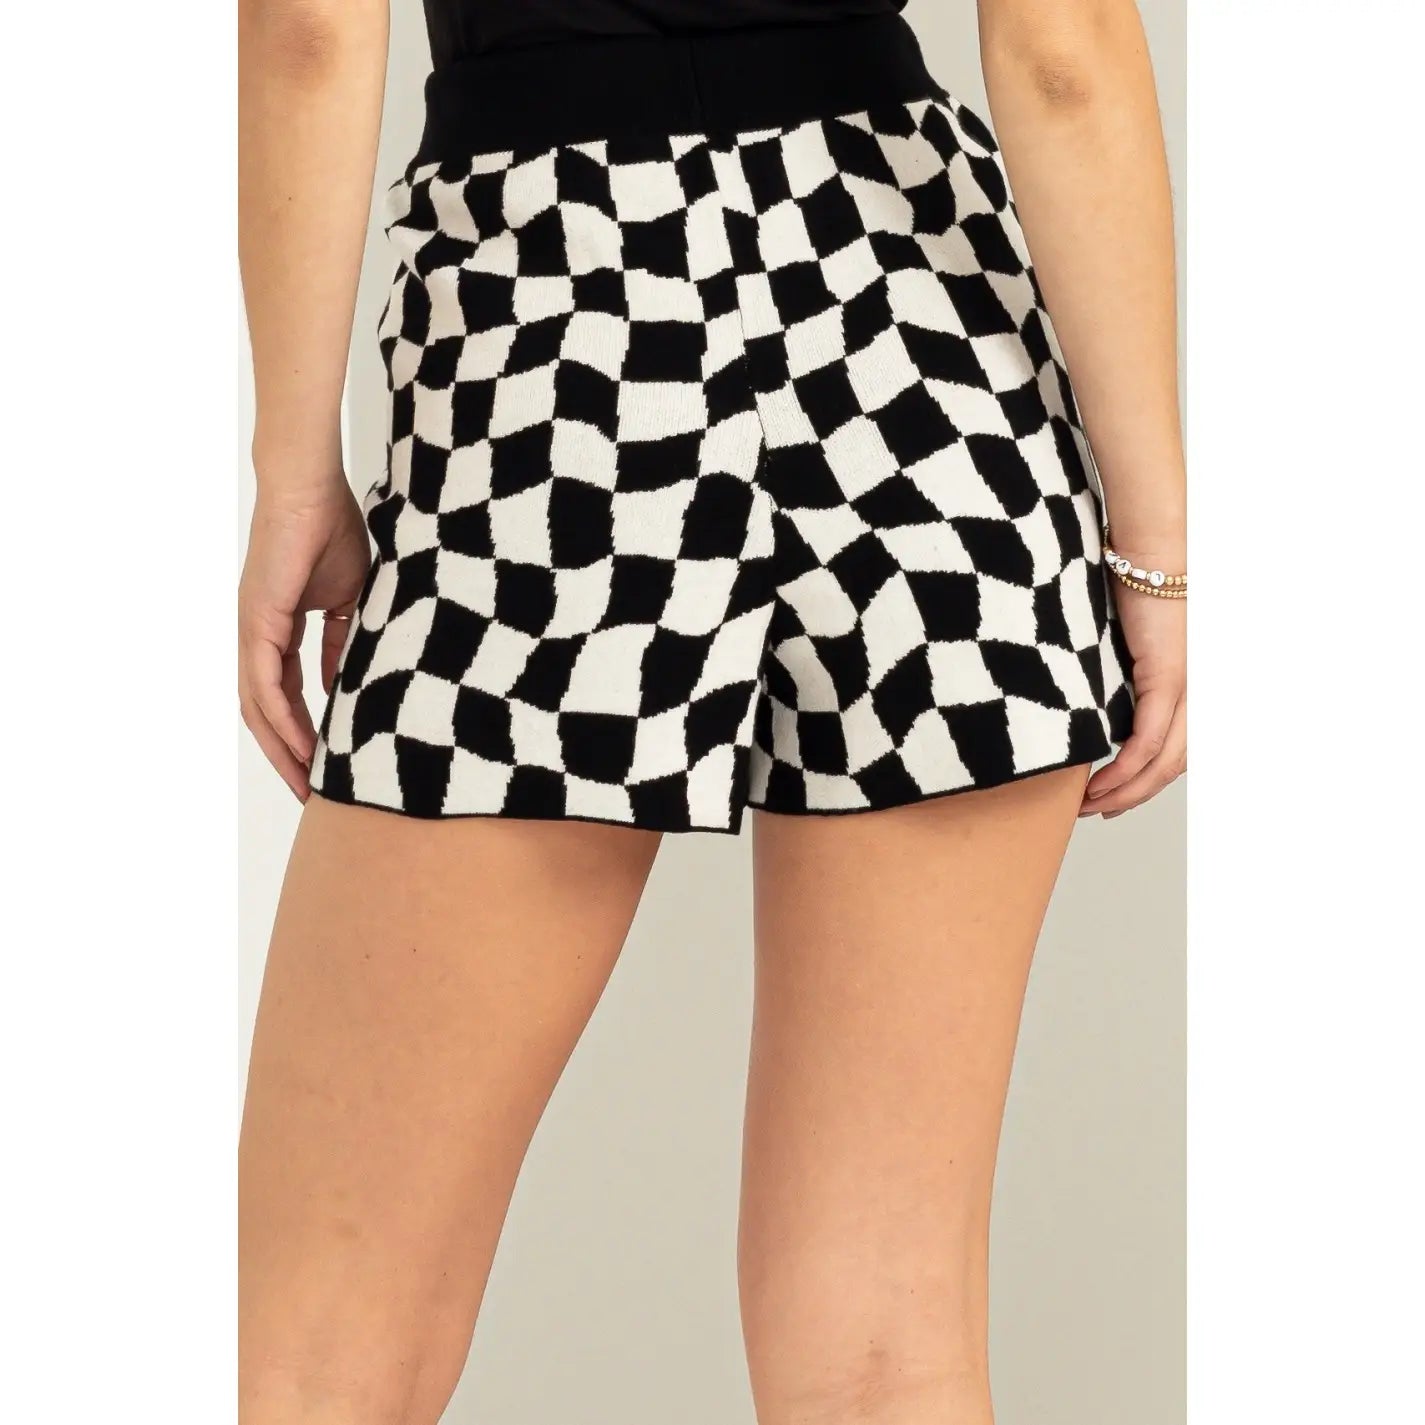 Dream State Checkered Shorts